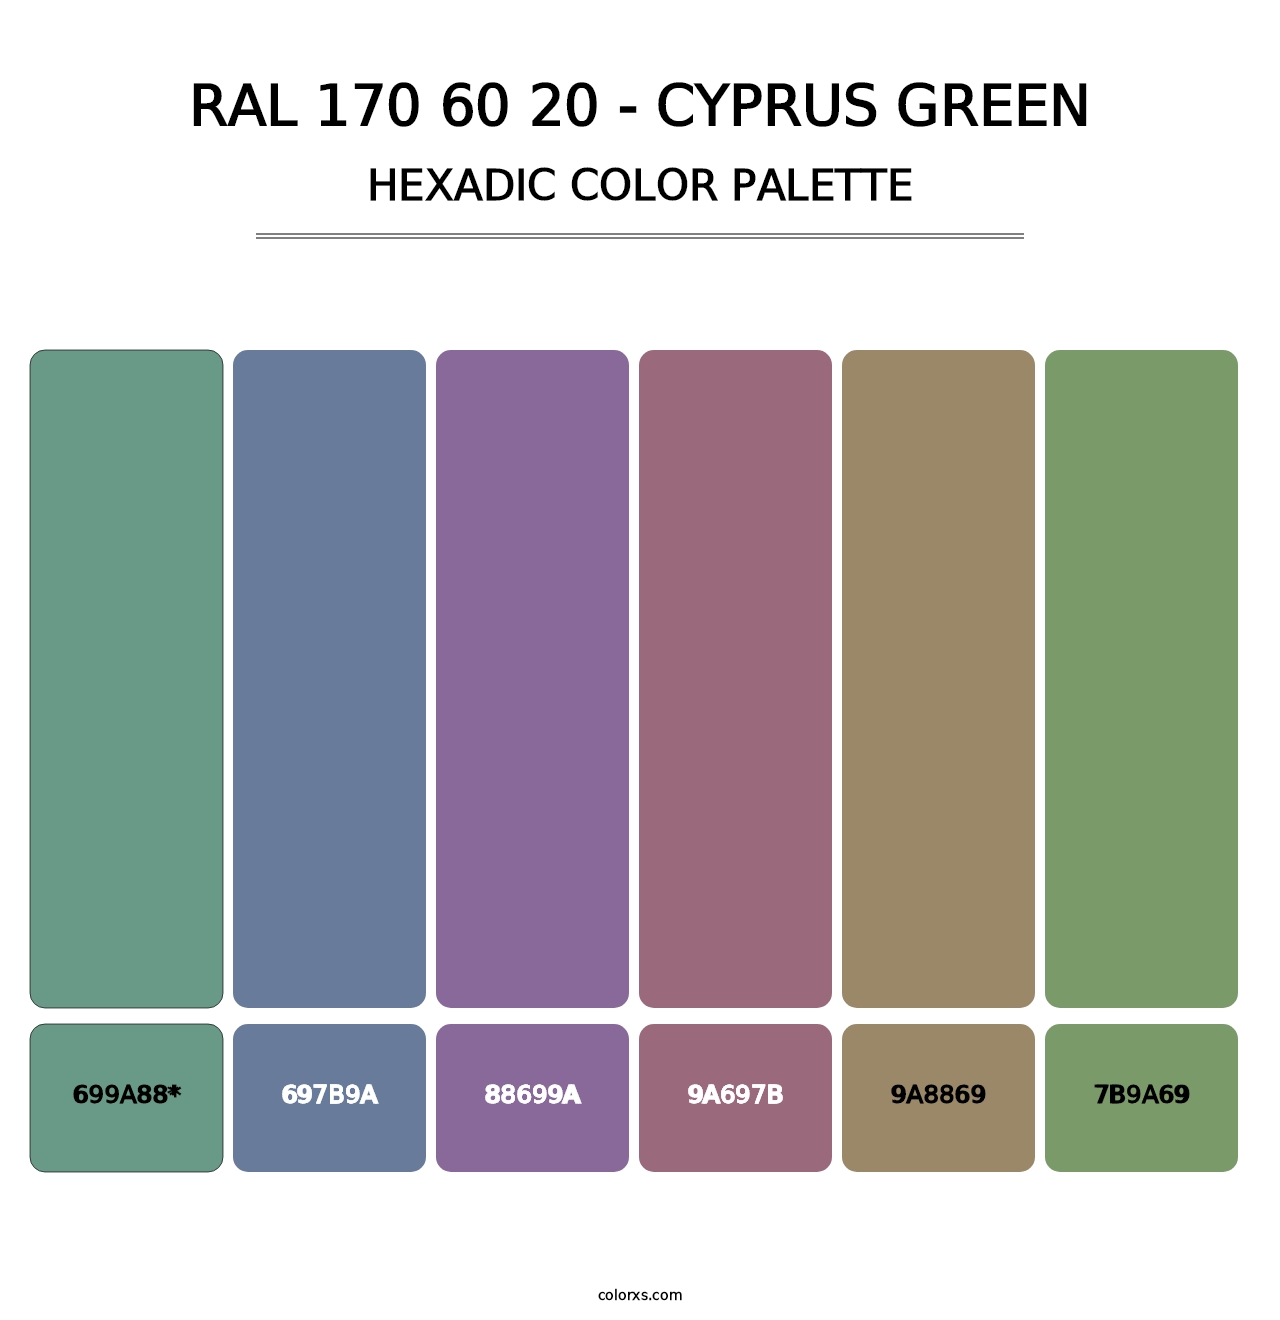 RAL 170 60 20 - Cyprus Green - Hexadic Color Palette